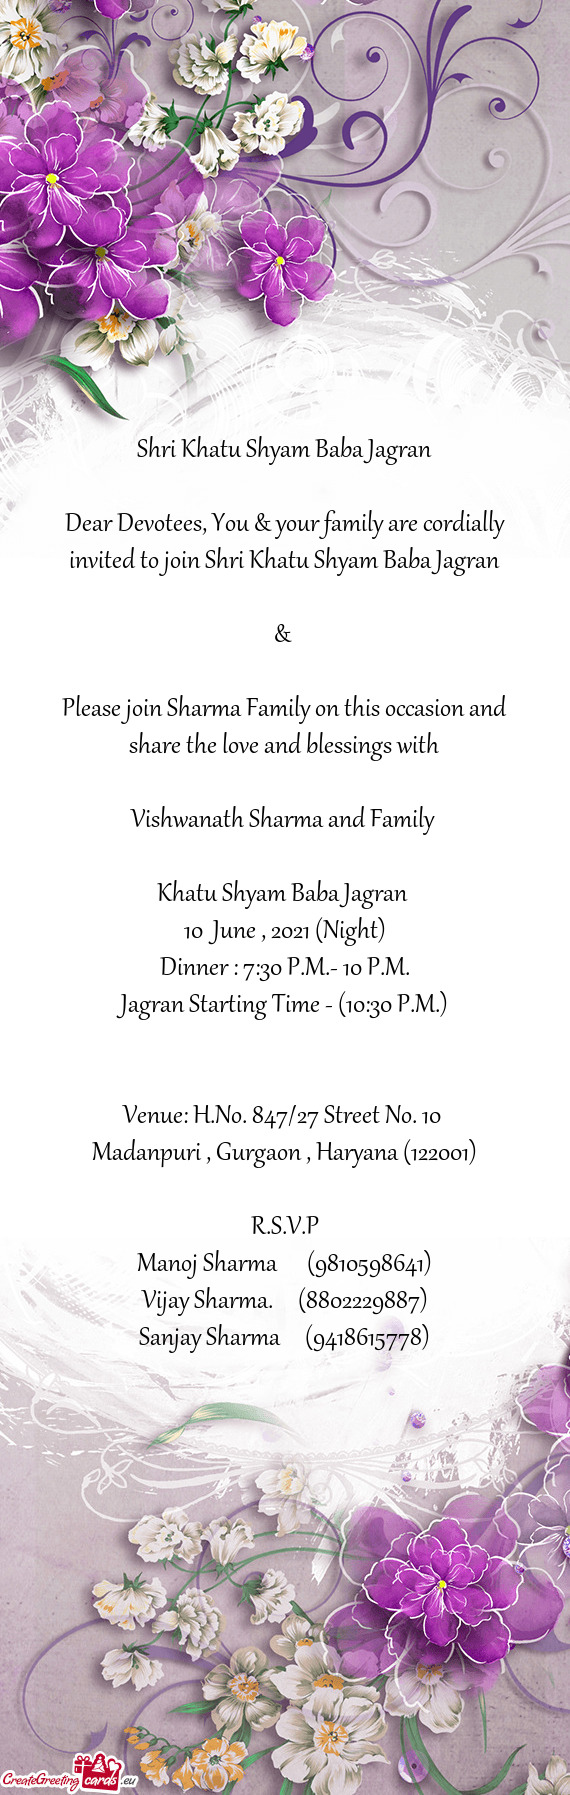 Vishwanath Sharma and Family